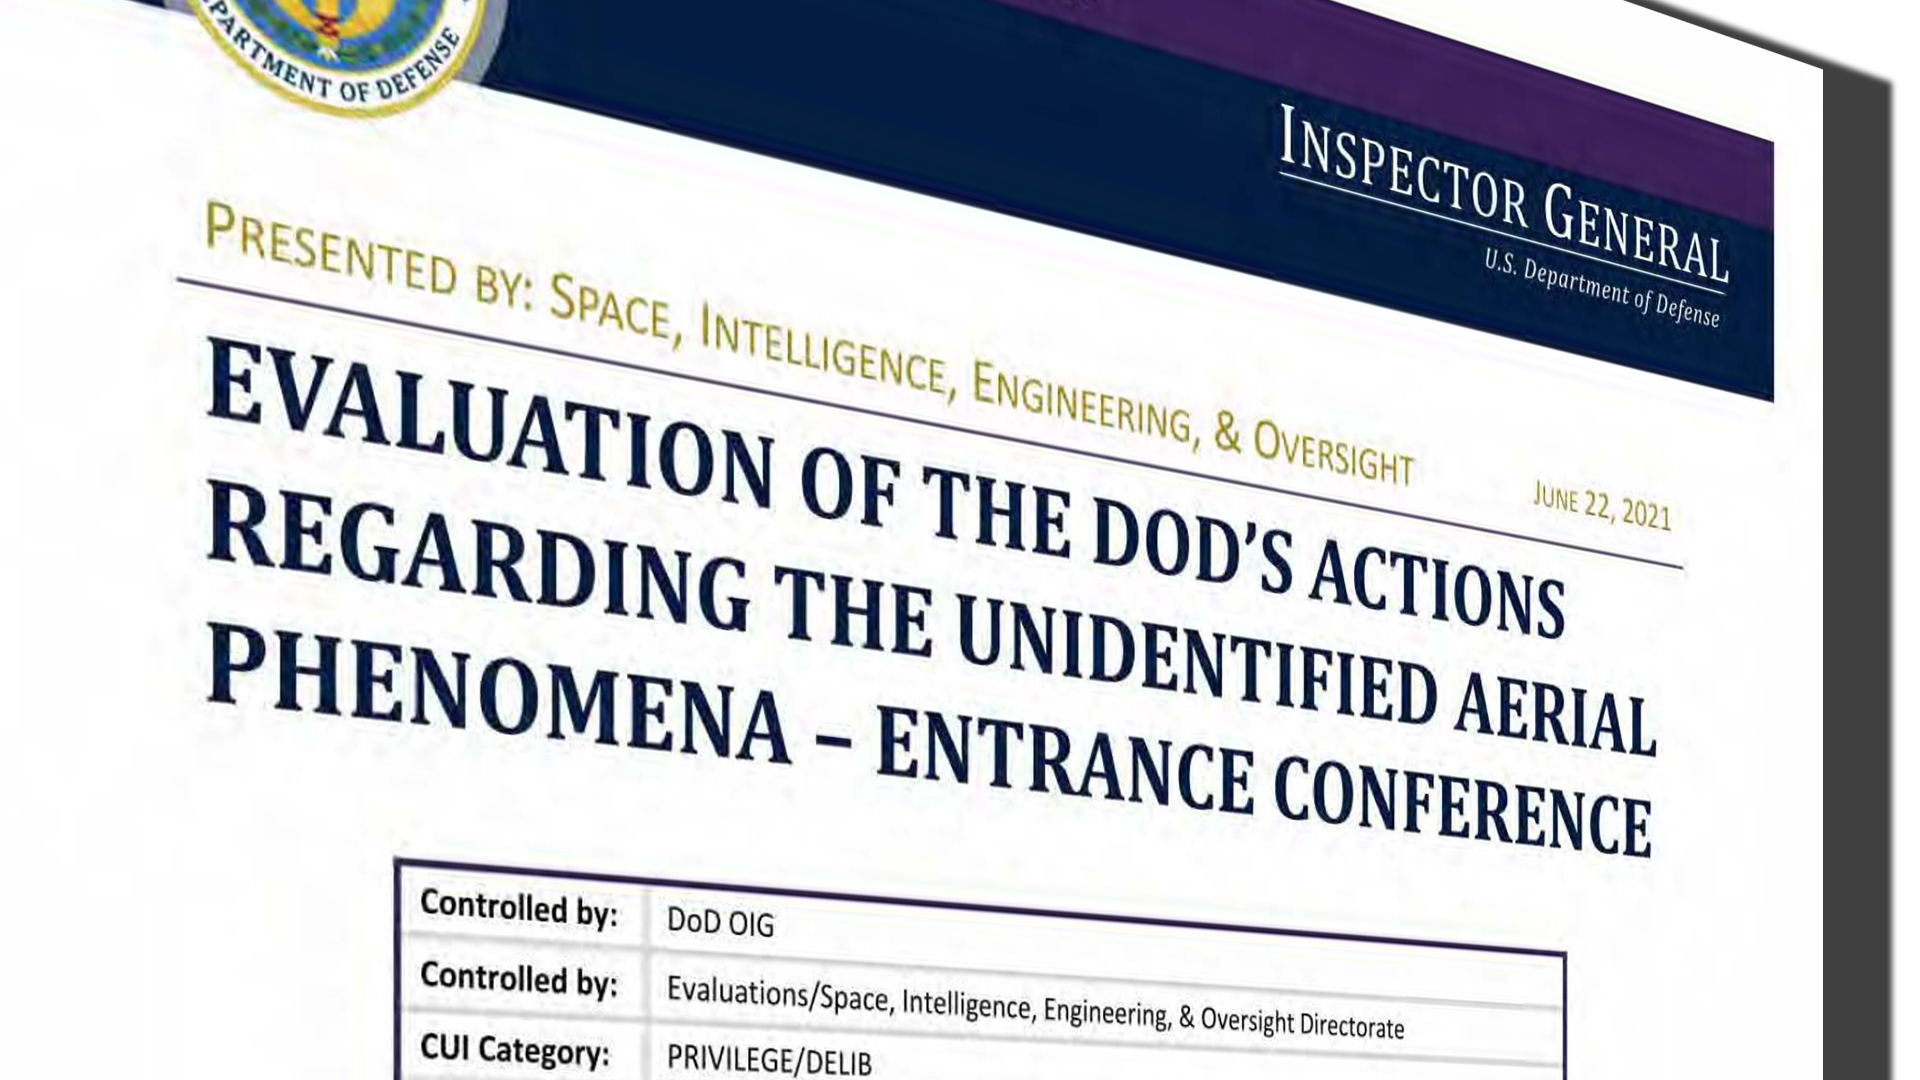 Internal DoD/IG PowerPoint Presentation on UFO/UAP Evaluation Released